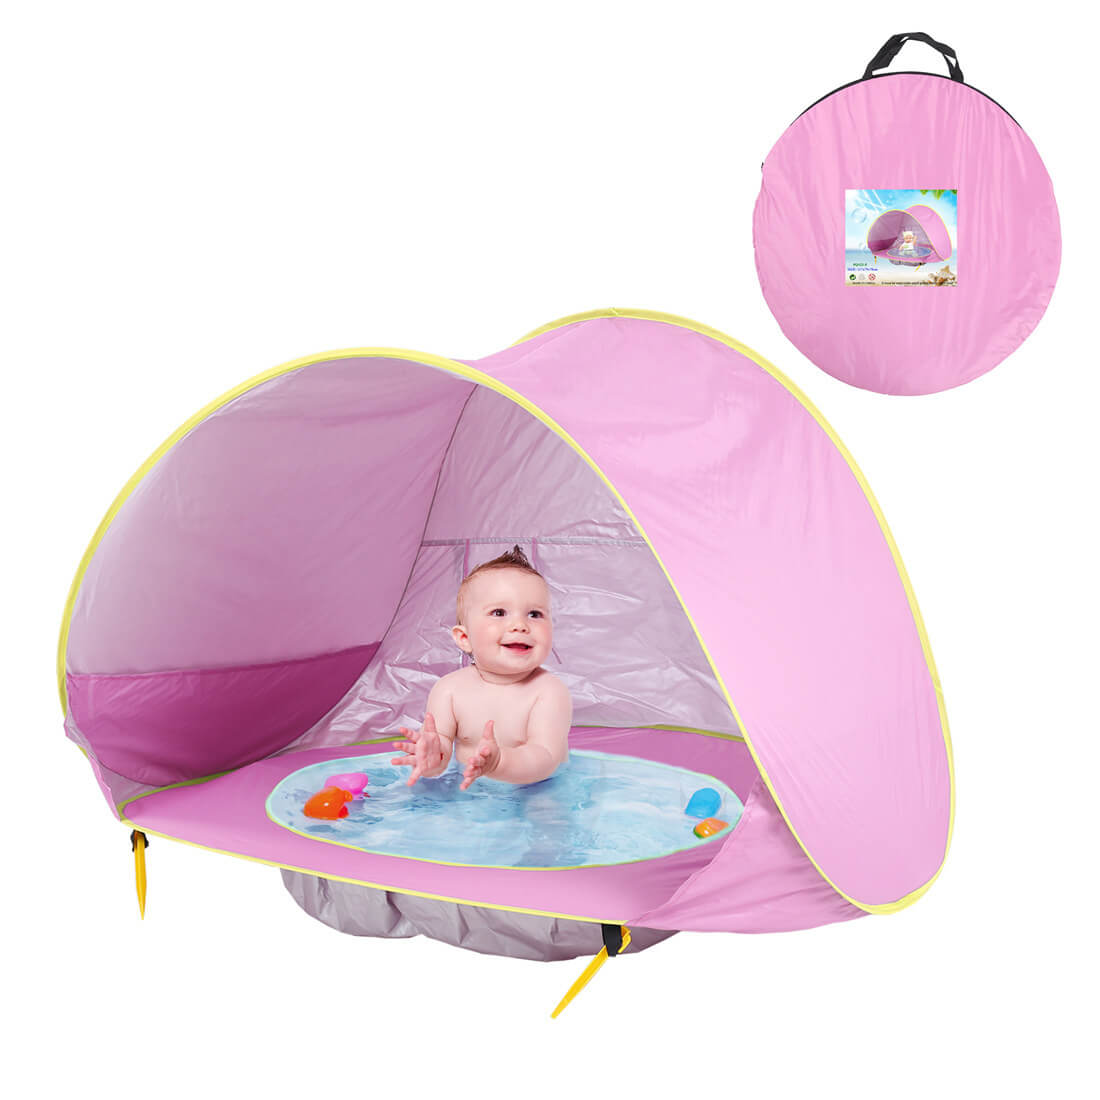 Premium UV-Protecting Baby Beach Tent